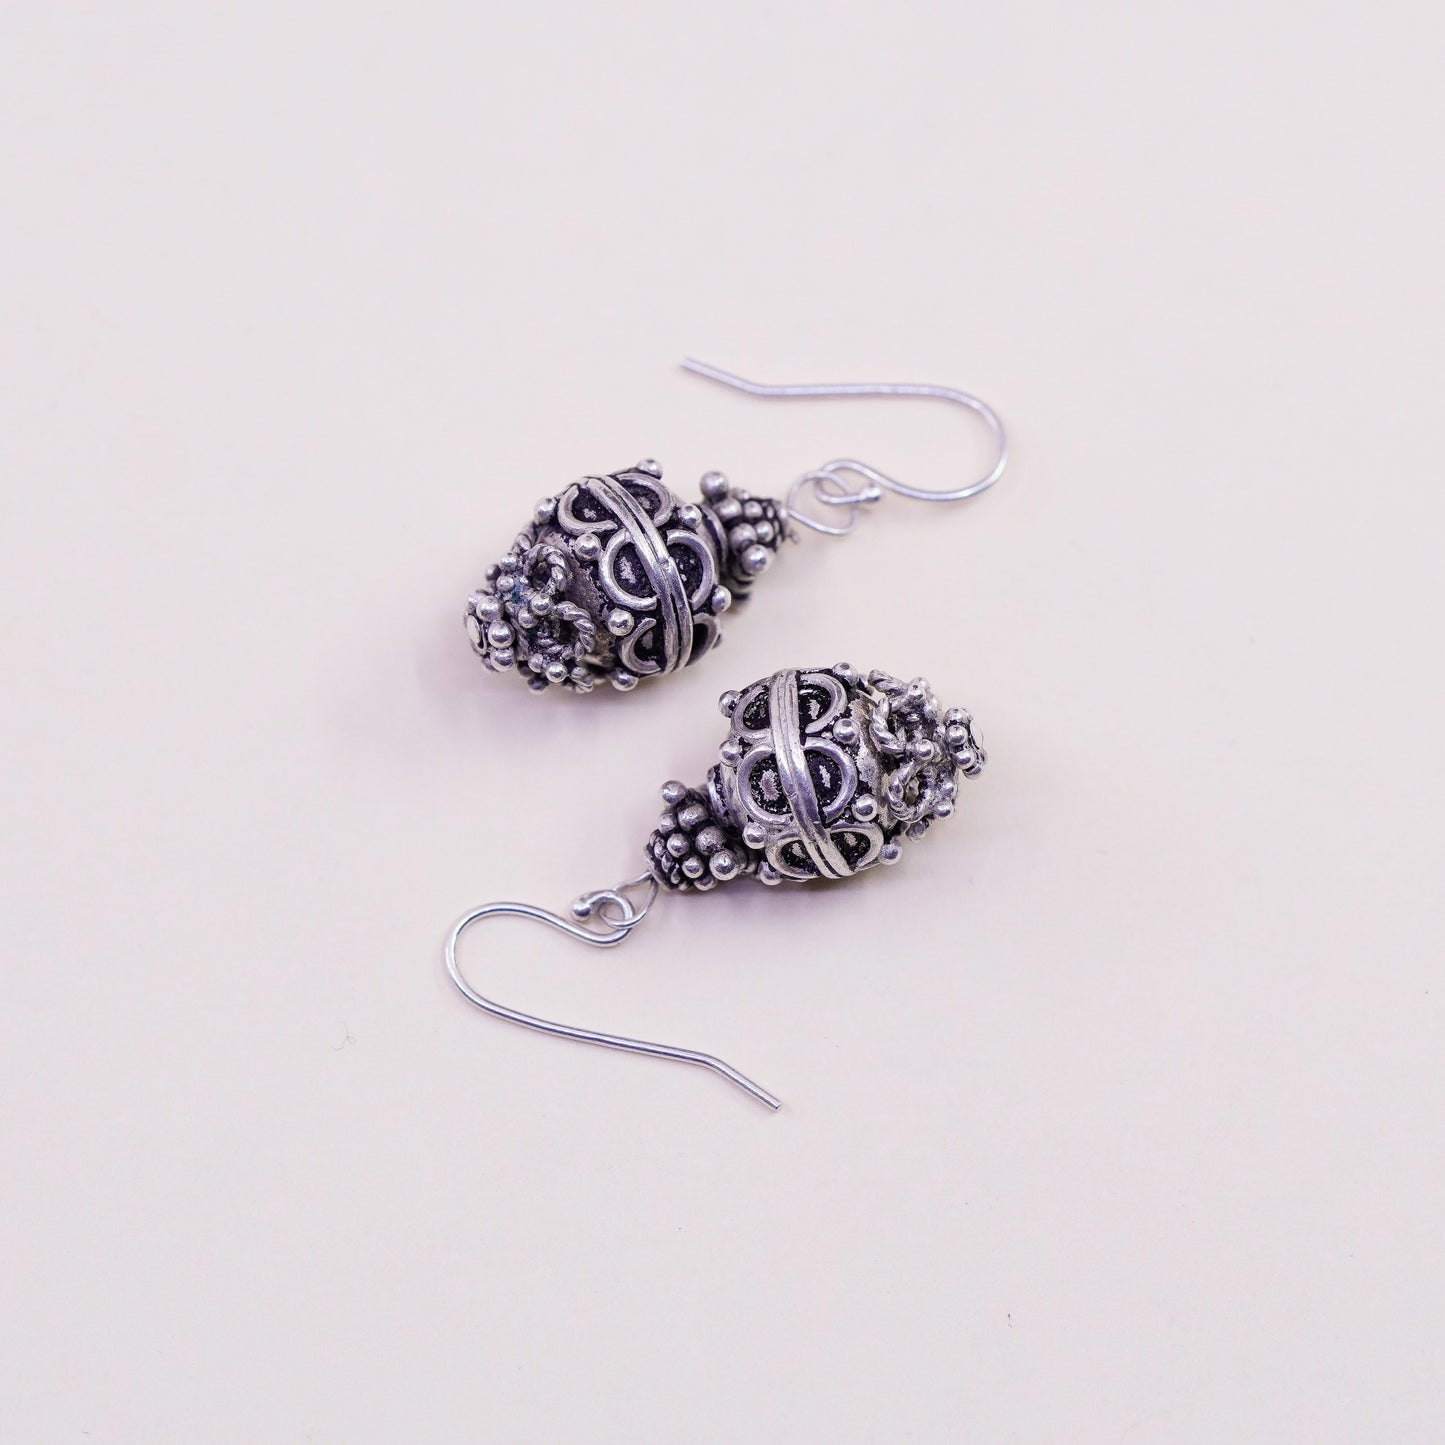 Vintage silver tone Bali earrings